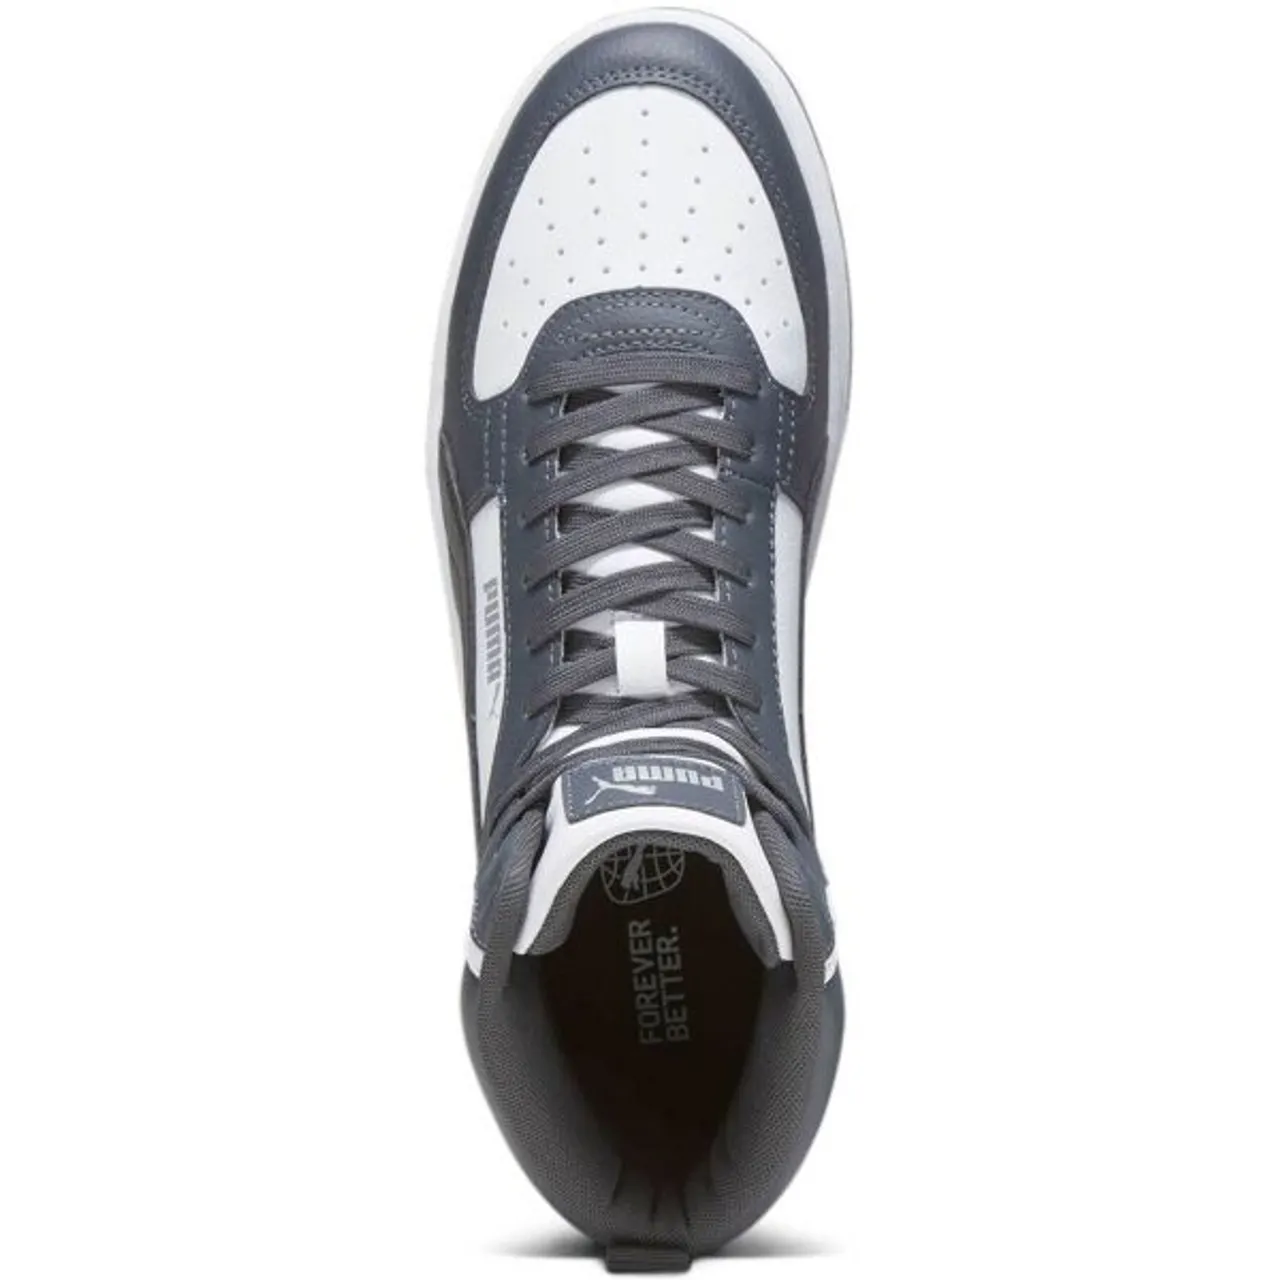 Sneaker PUMA "CAVEN 2.0 MID" Gr. 42, schwarz-weiß (puma white, puma black, strong gray, silver) Schuhe Puma